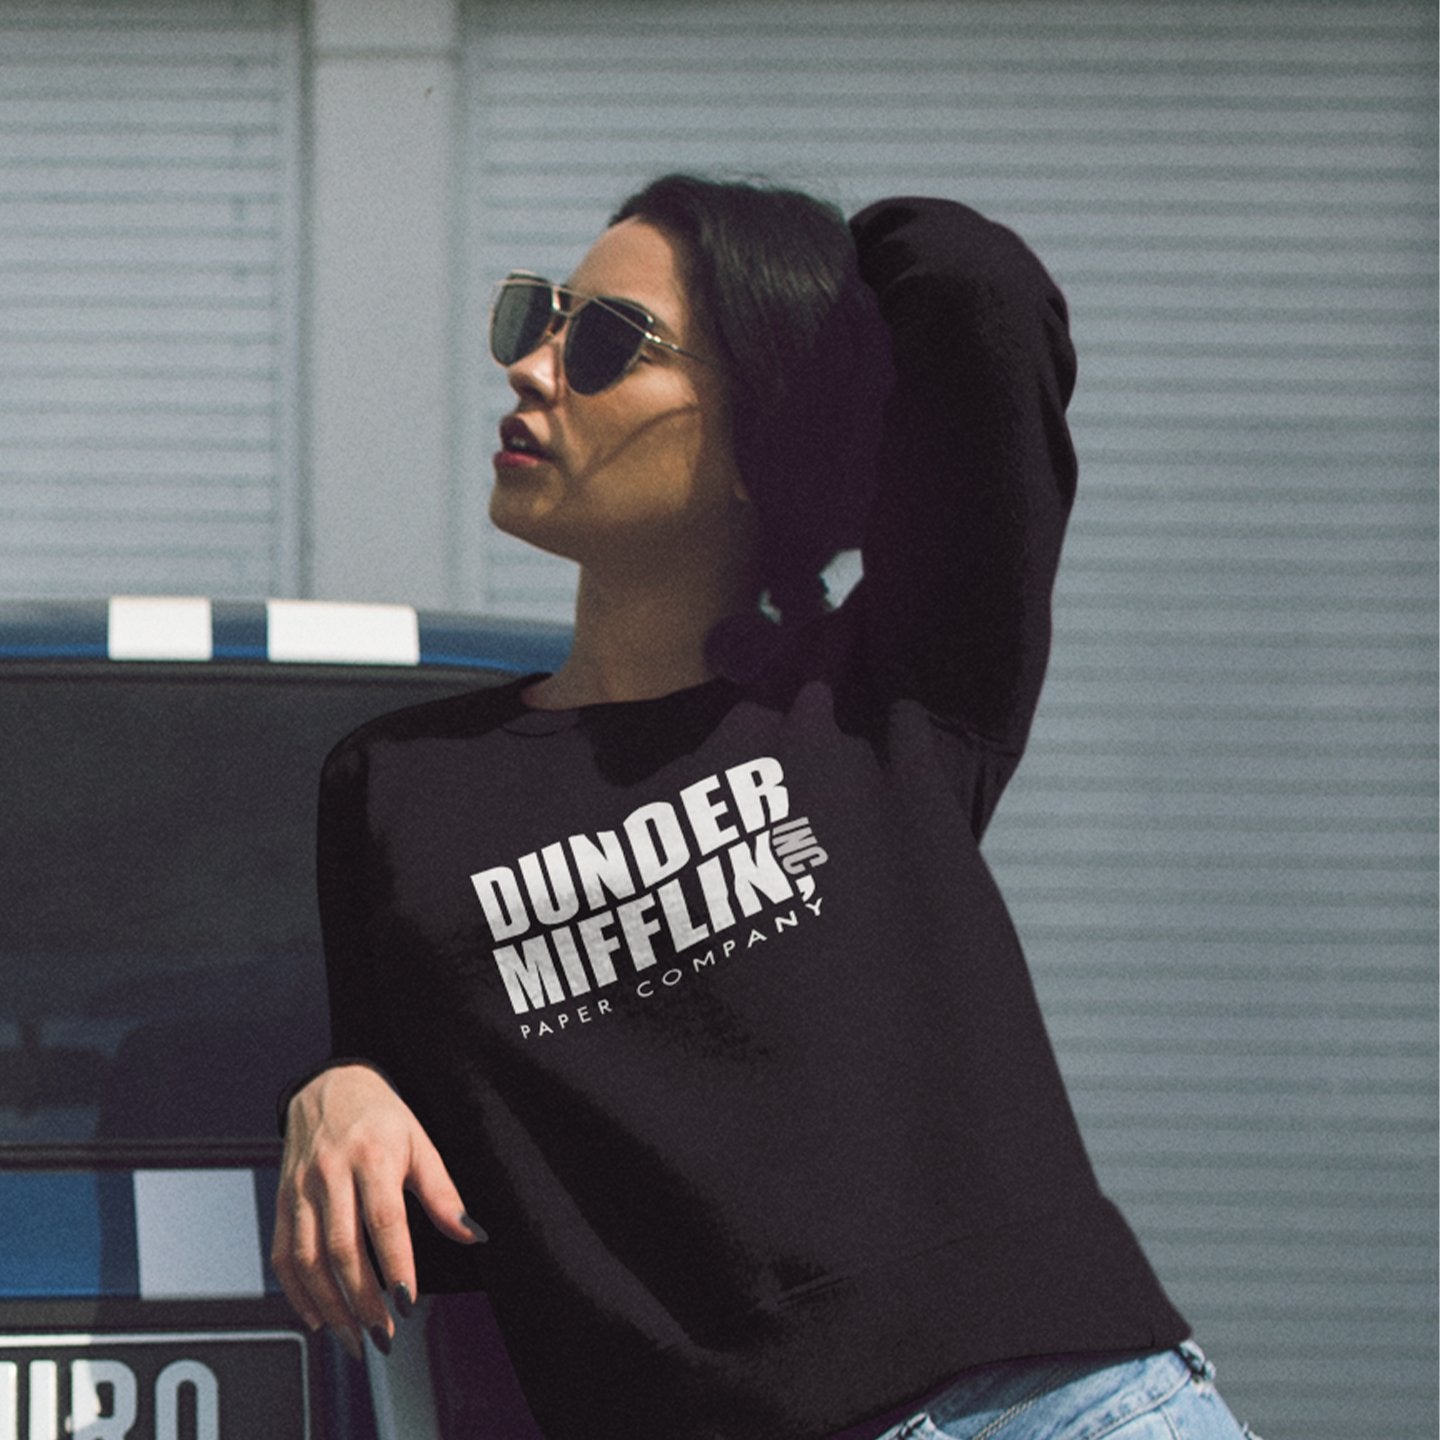 Dunder Mifflin The Office - Sweatshirt